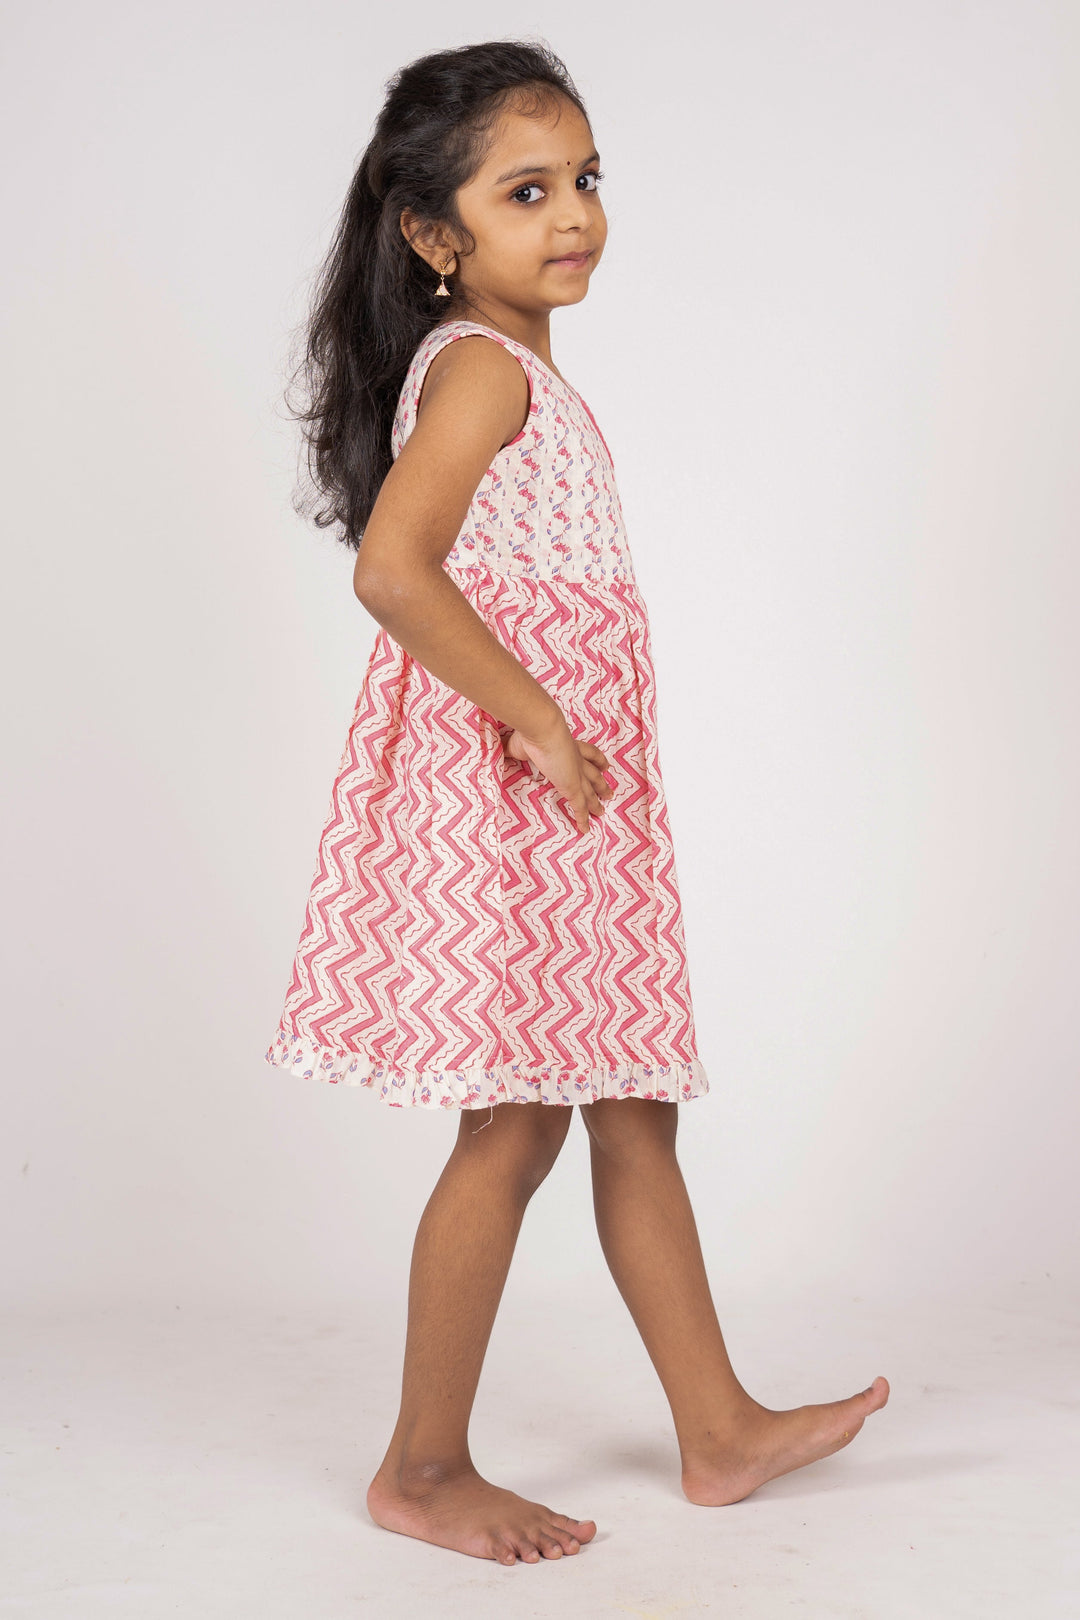 The Nesavu Baby Frock / Jhabla Pink Sleeveless Soft Cotton Gown For New Born Girl Kids With Ruffle Trims psr silks Nesavu